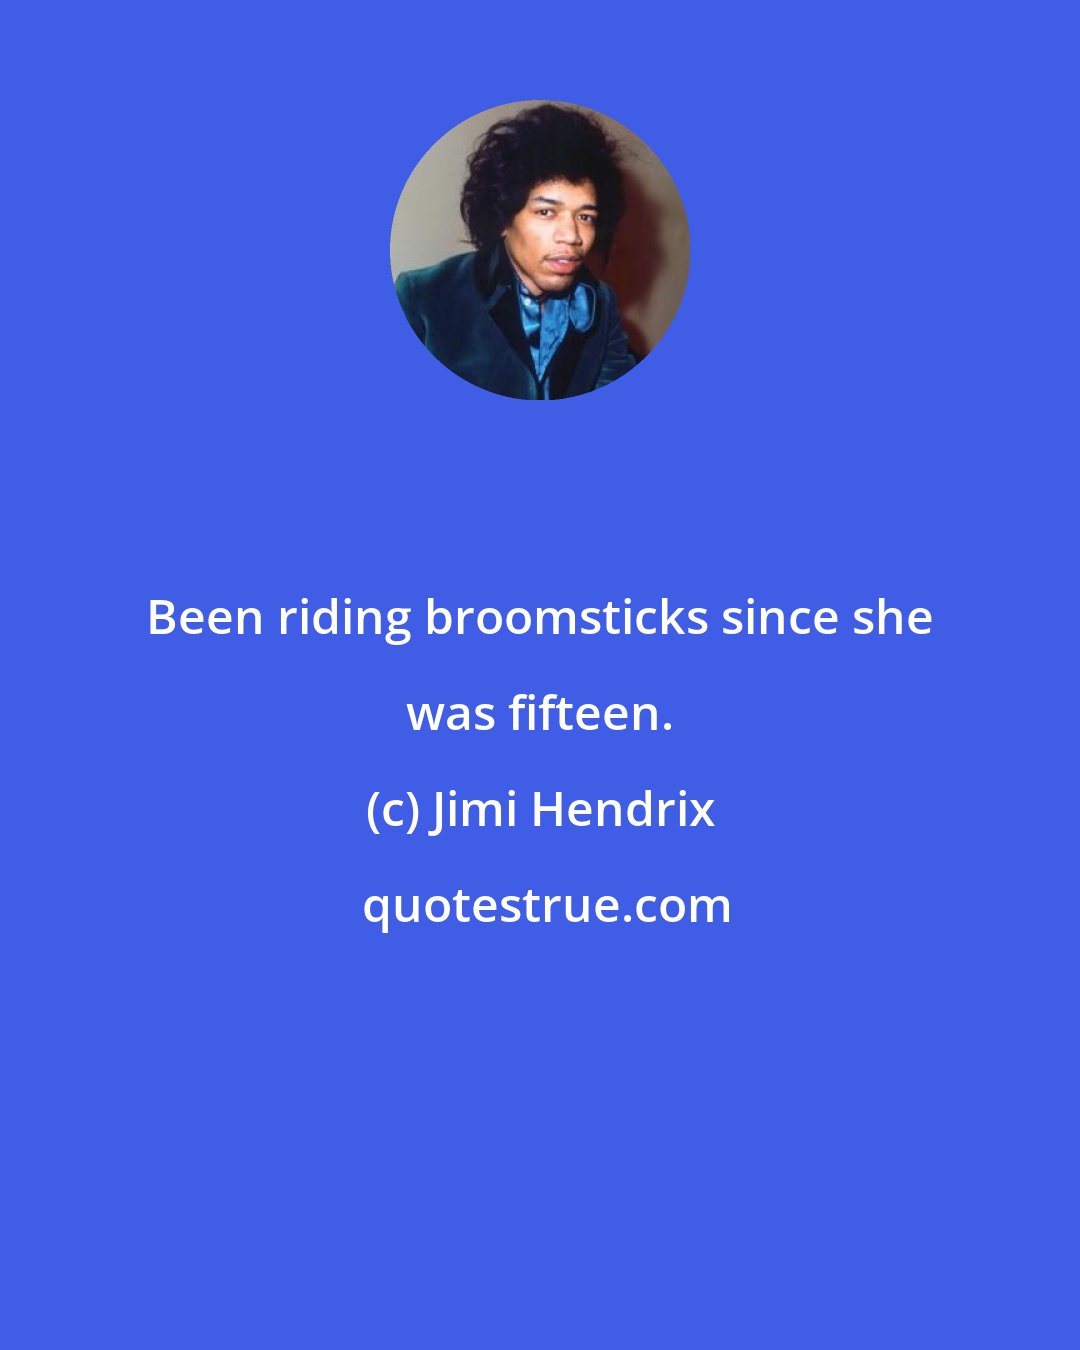 Jimi Hendrix: Been riding broomsticks since she was fifteen.